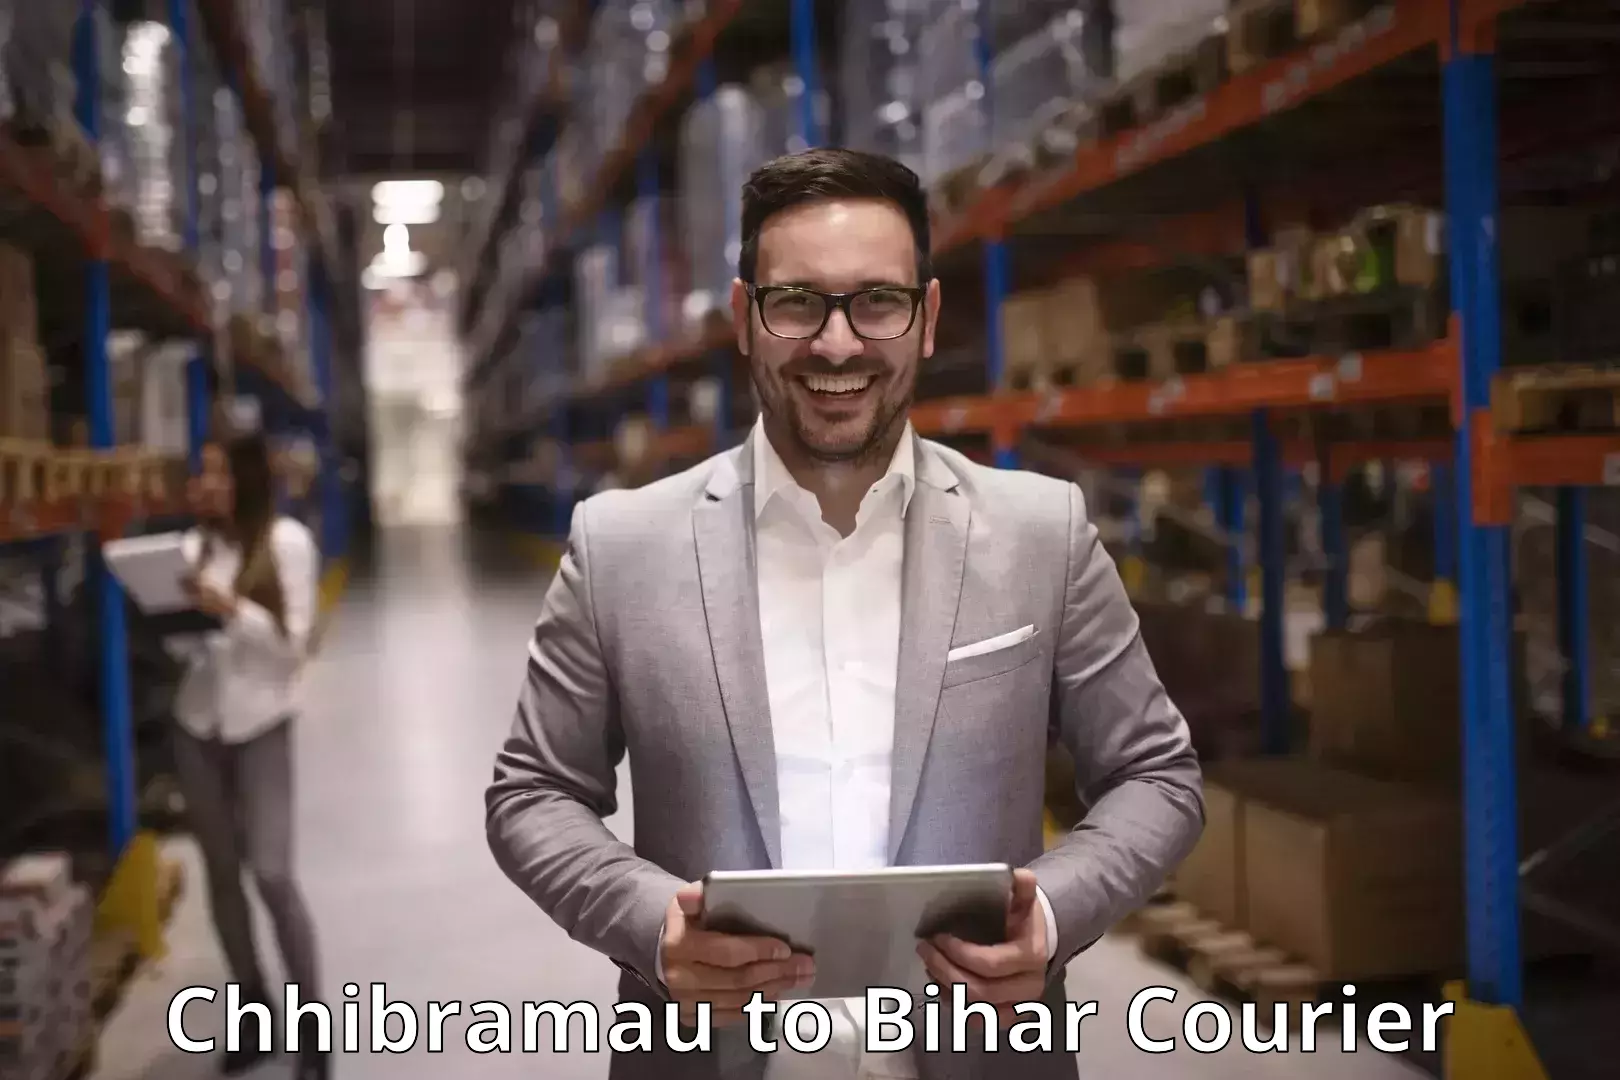 Courier service partnerships Chhibramau to Bihar